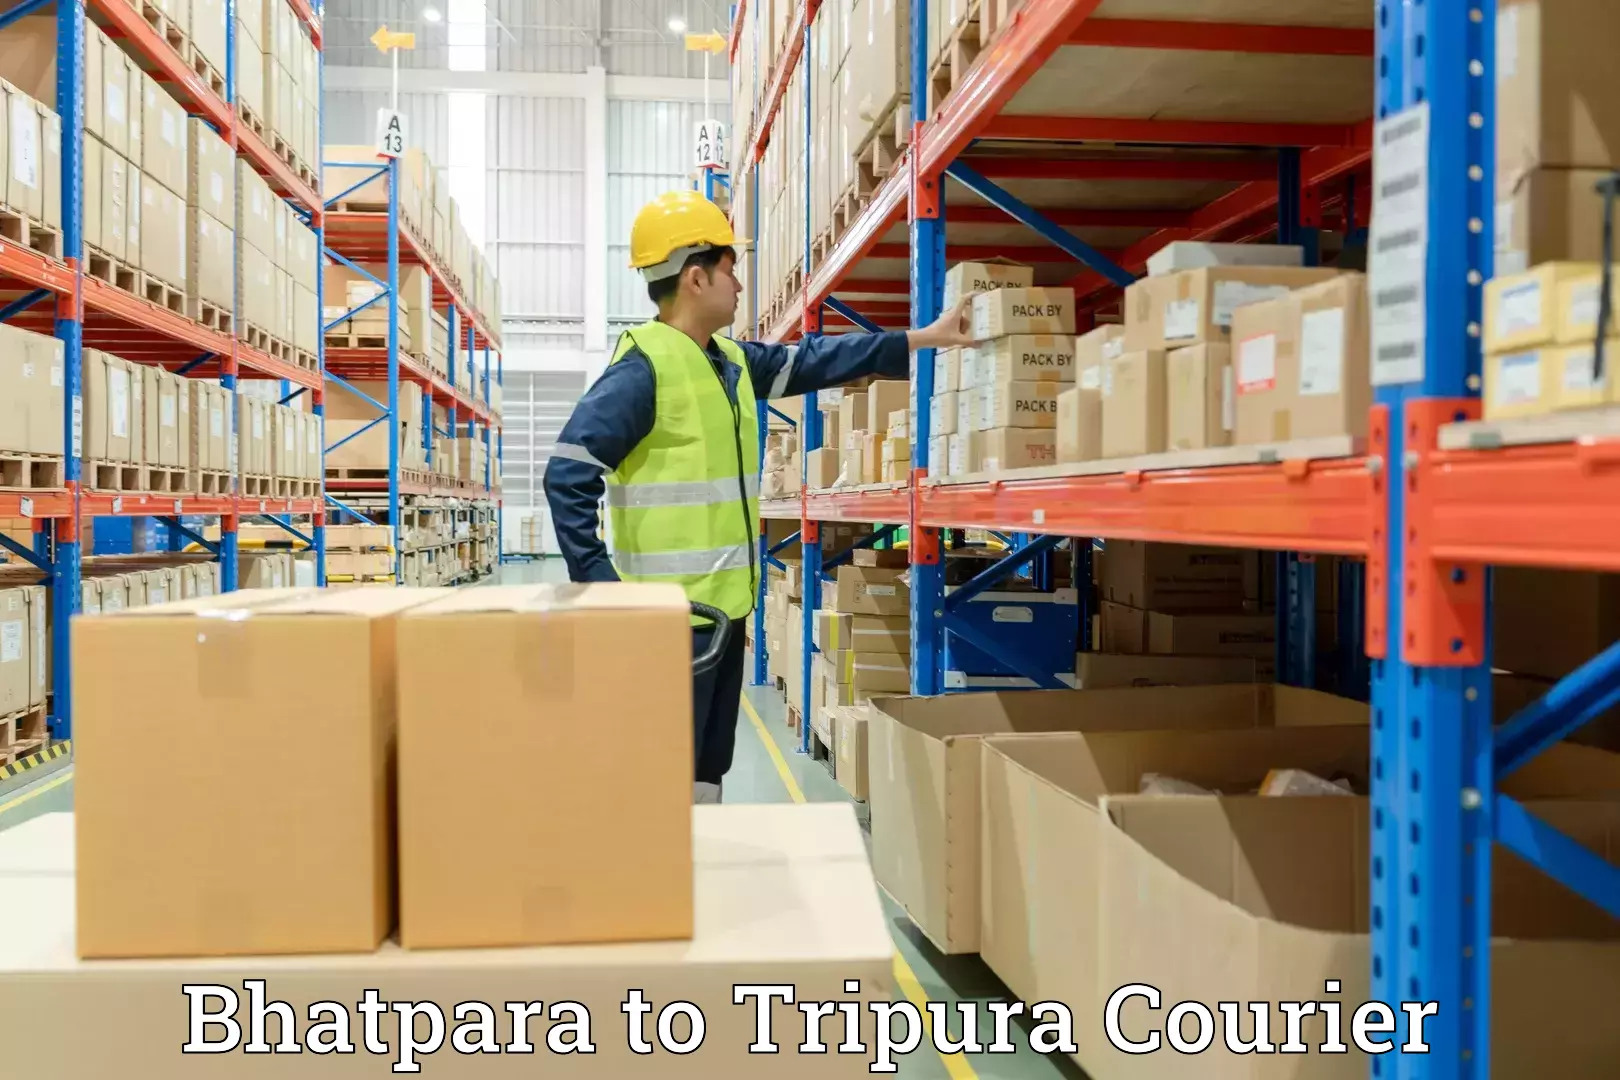 Reliable movers Bhatpara to Udaipur Tripura